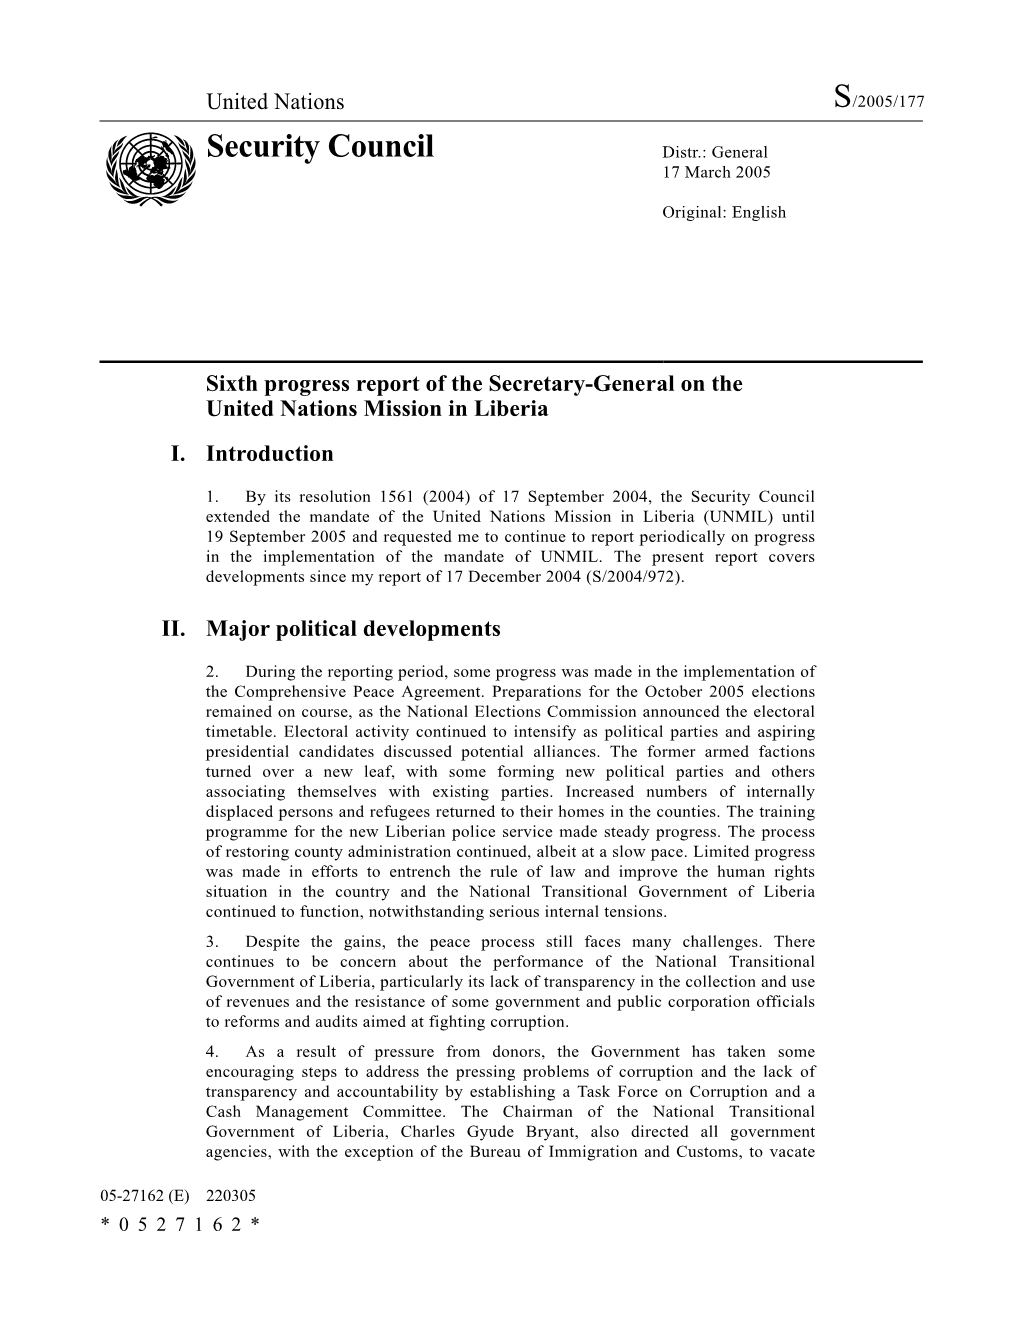 Security Council Distr.: General 17 March 2005